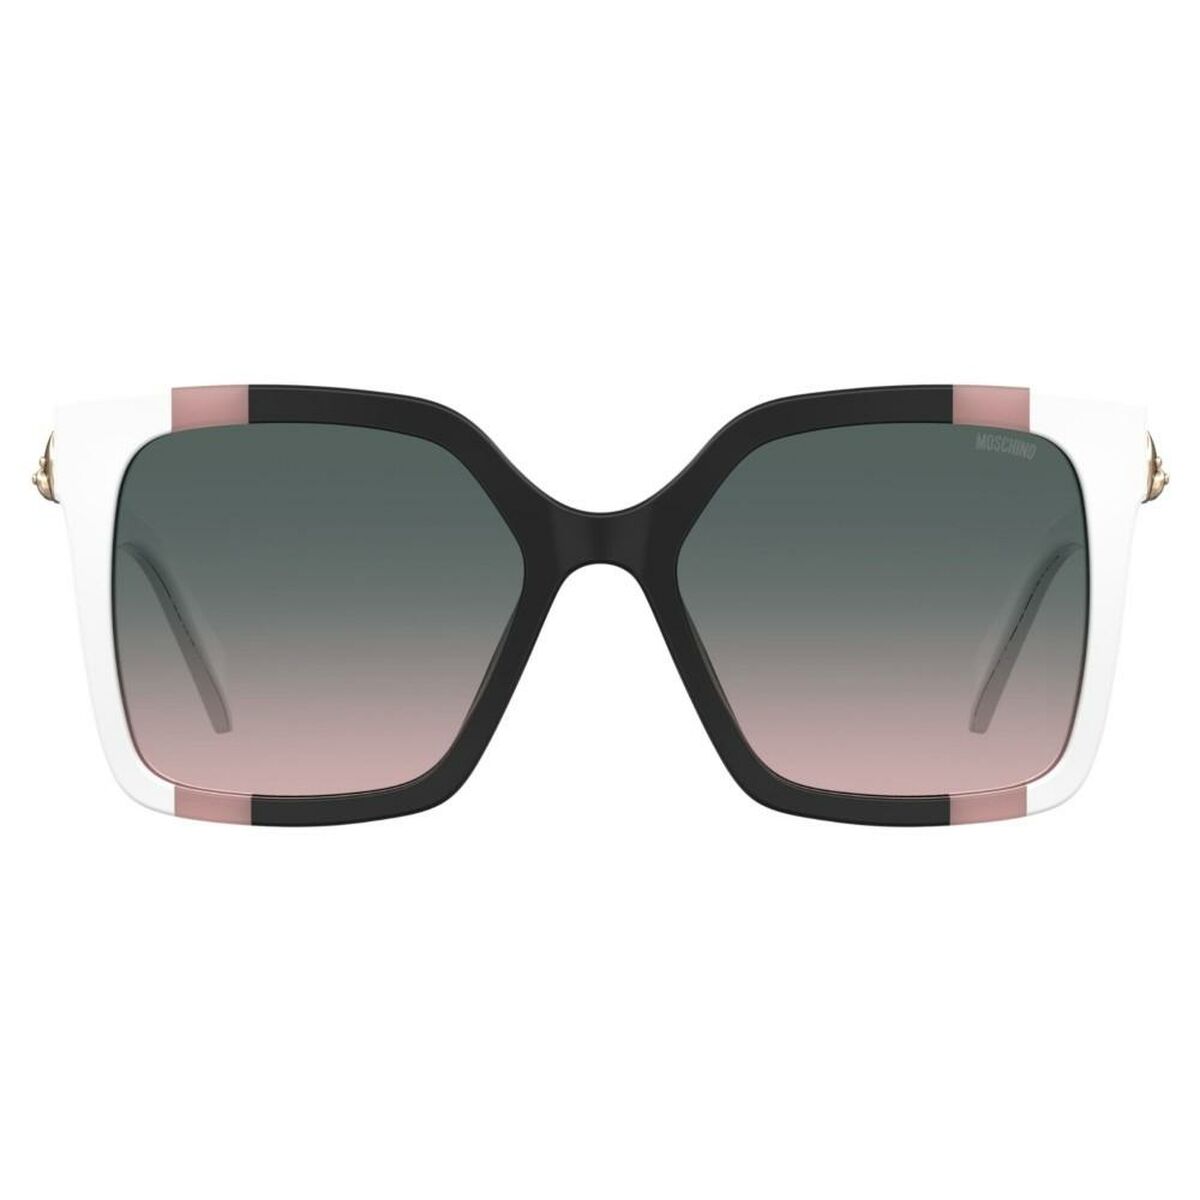 Kaufe Damensonnenbrille Moschino MOS123_S bei AWK Flagship um € 229.00